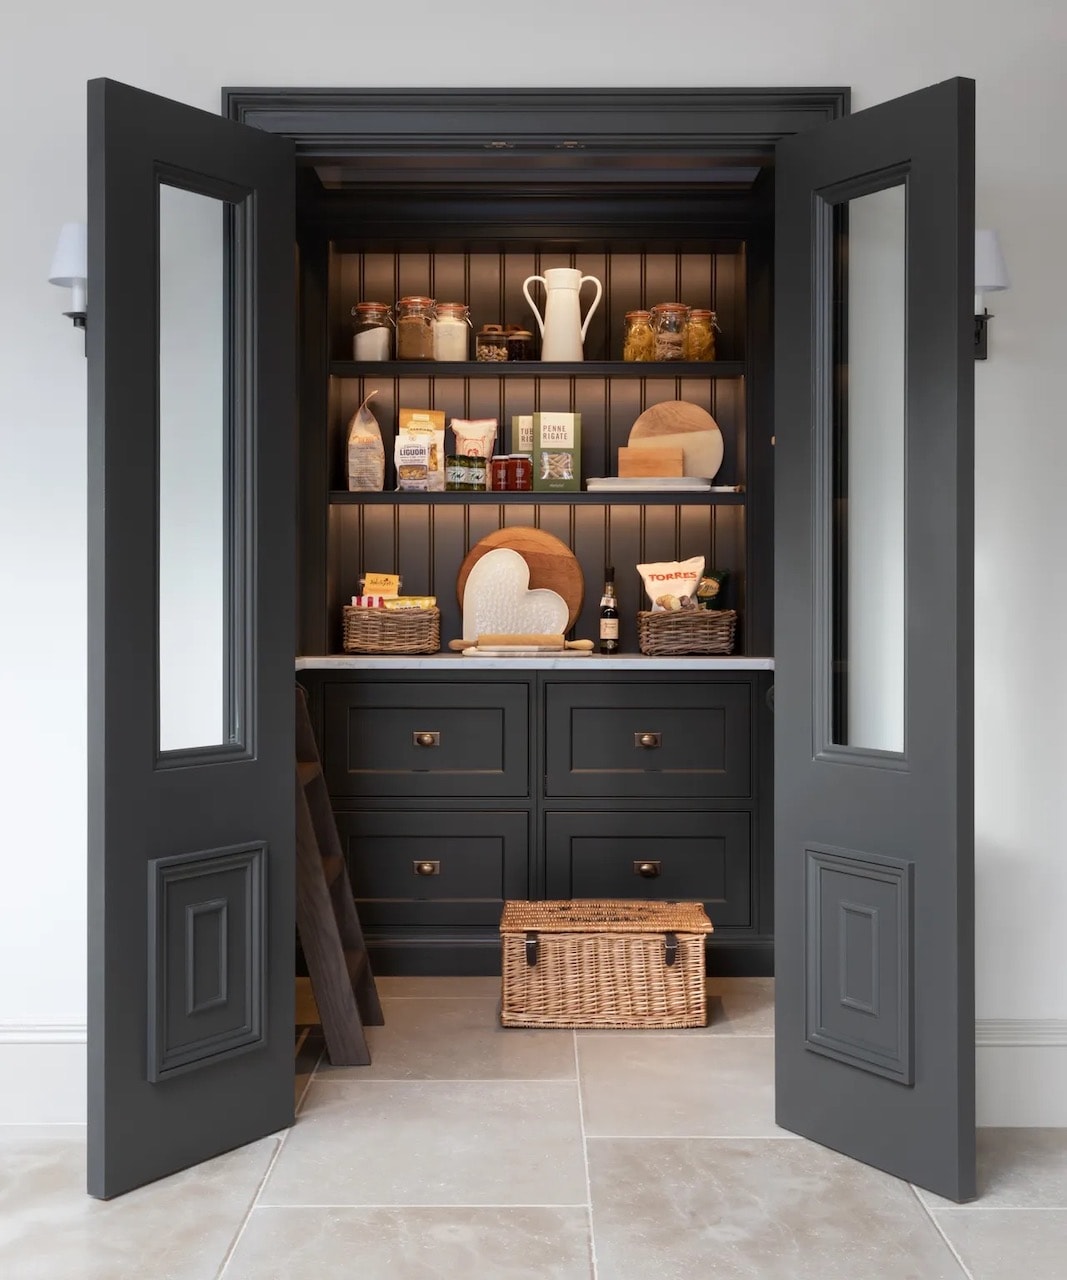 stylish kitchen pantry ideas to maximize space lighting shelves.jpg